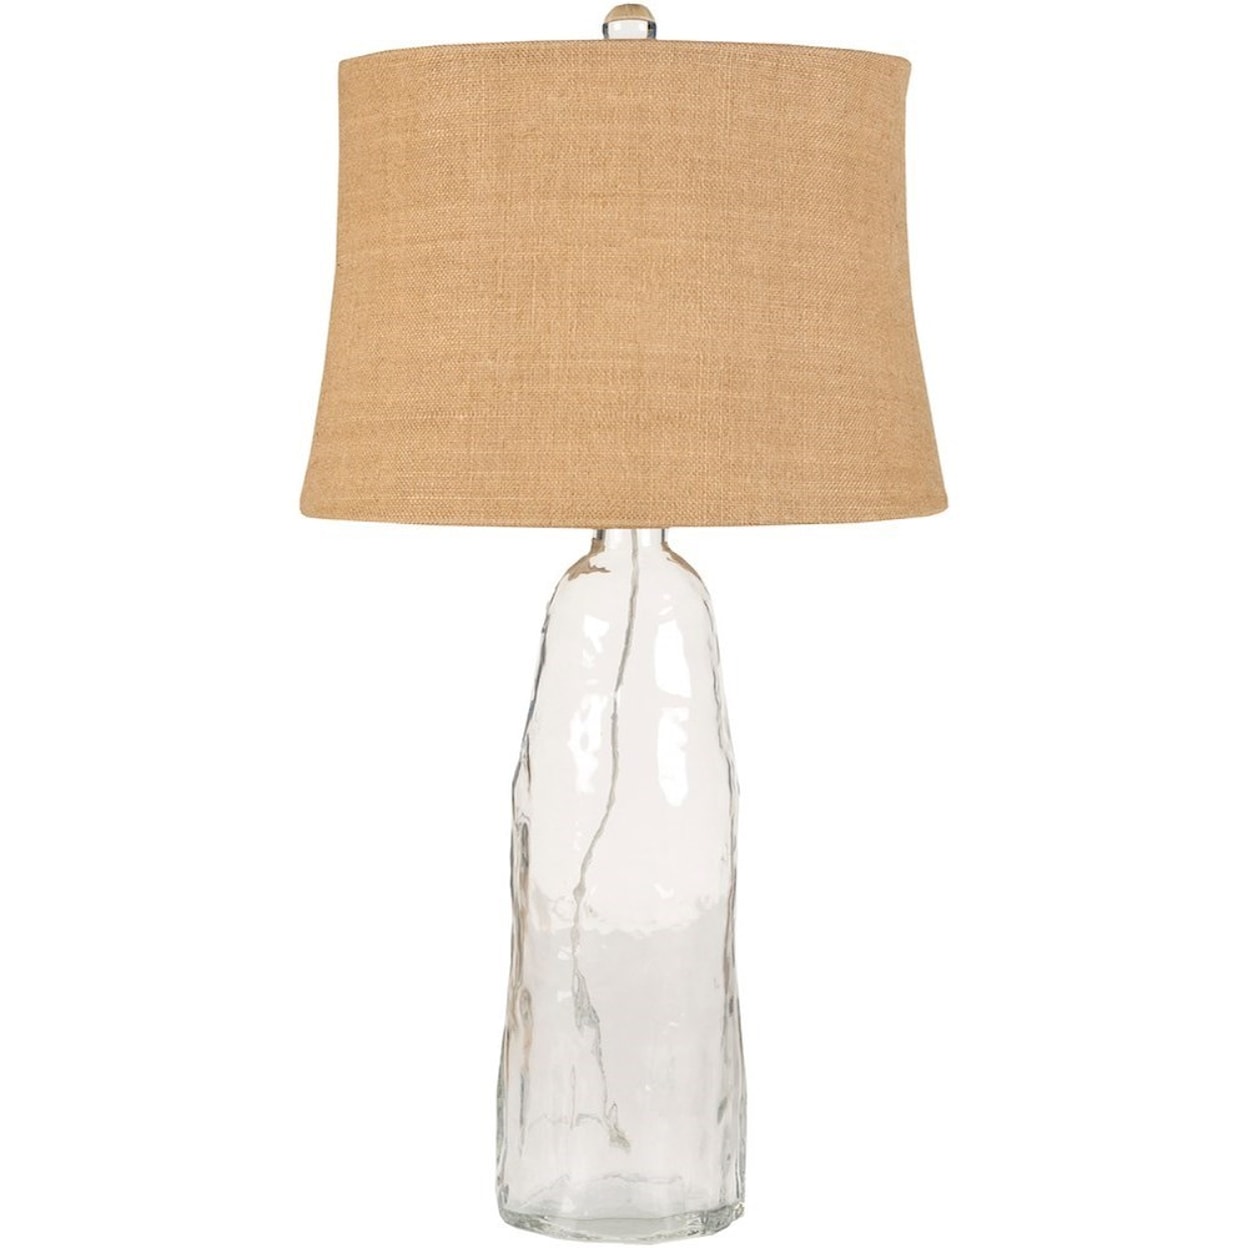 Surya Lamps Clear Glass Coastal Table Lamp